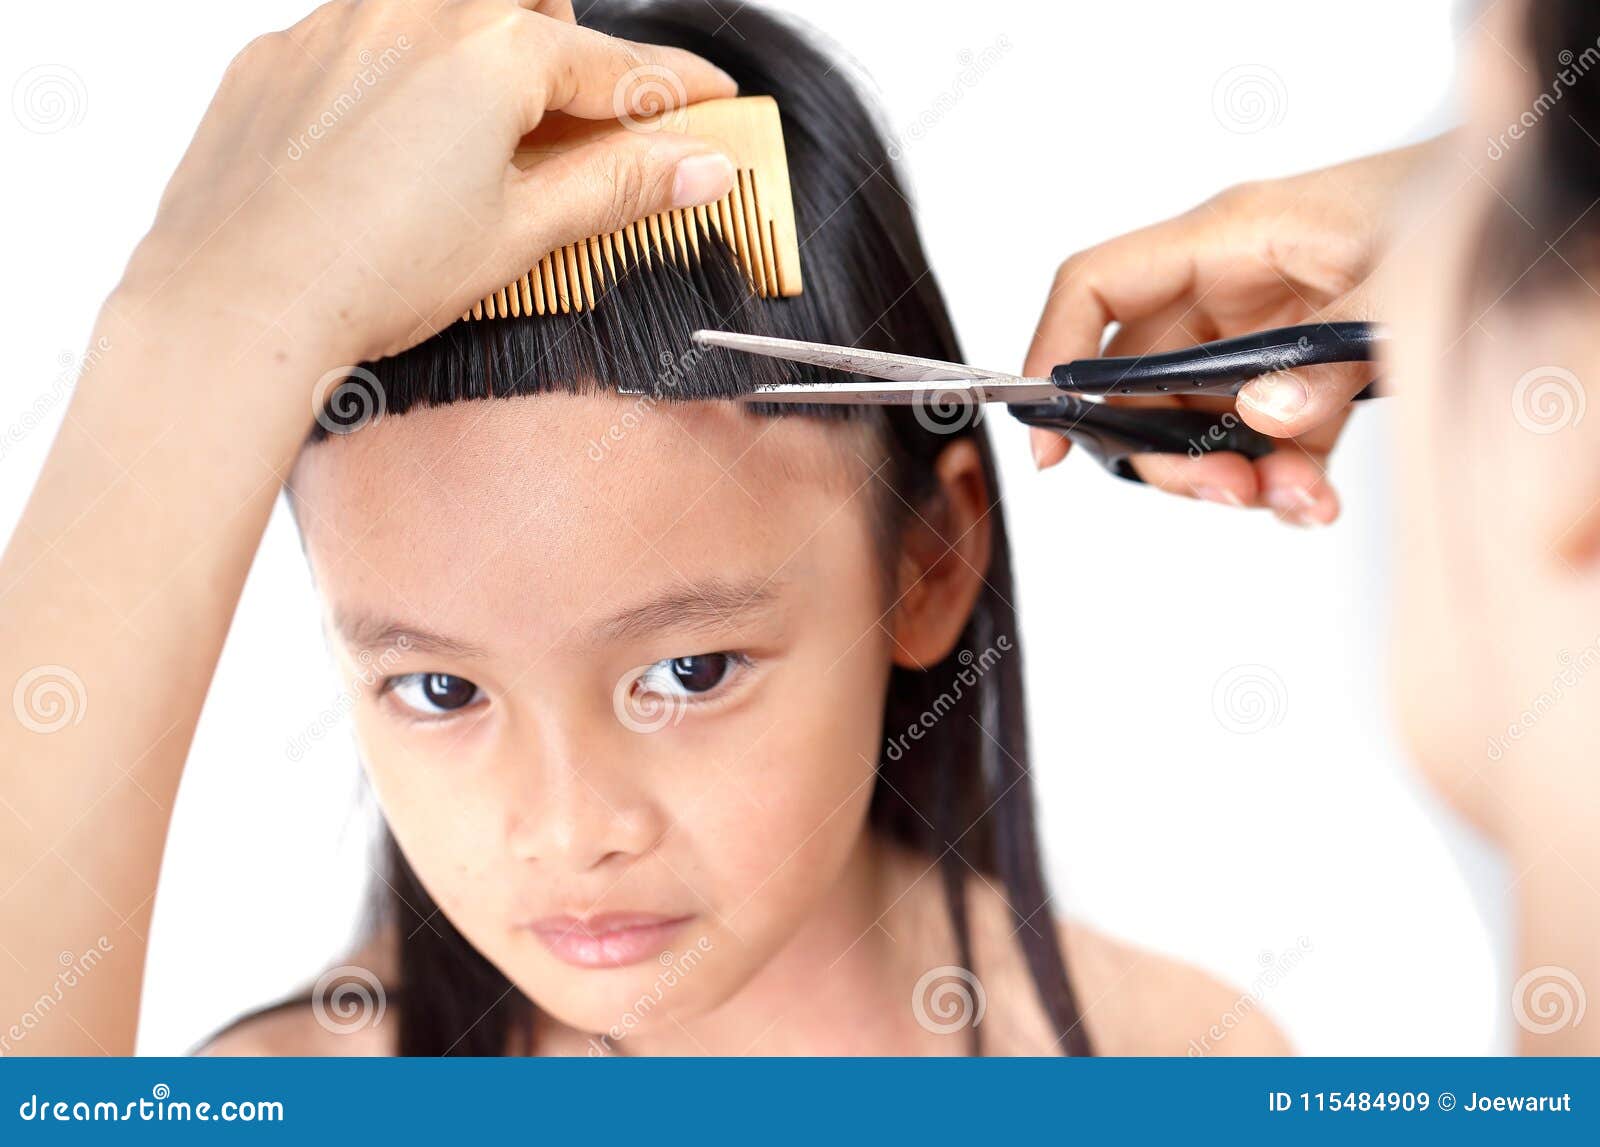 Traditional Hairstlye With Bangs Stock Image Image Of Girl